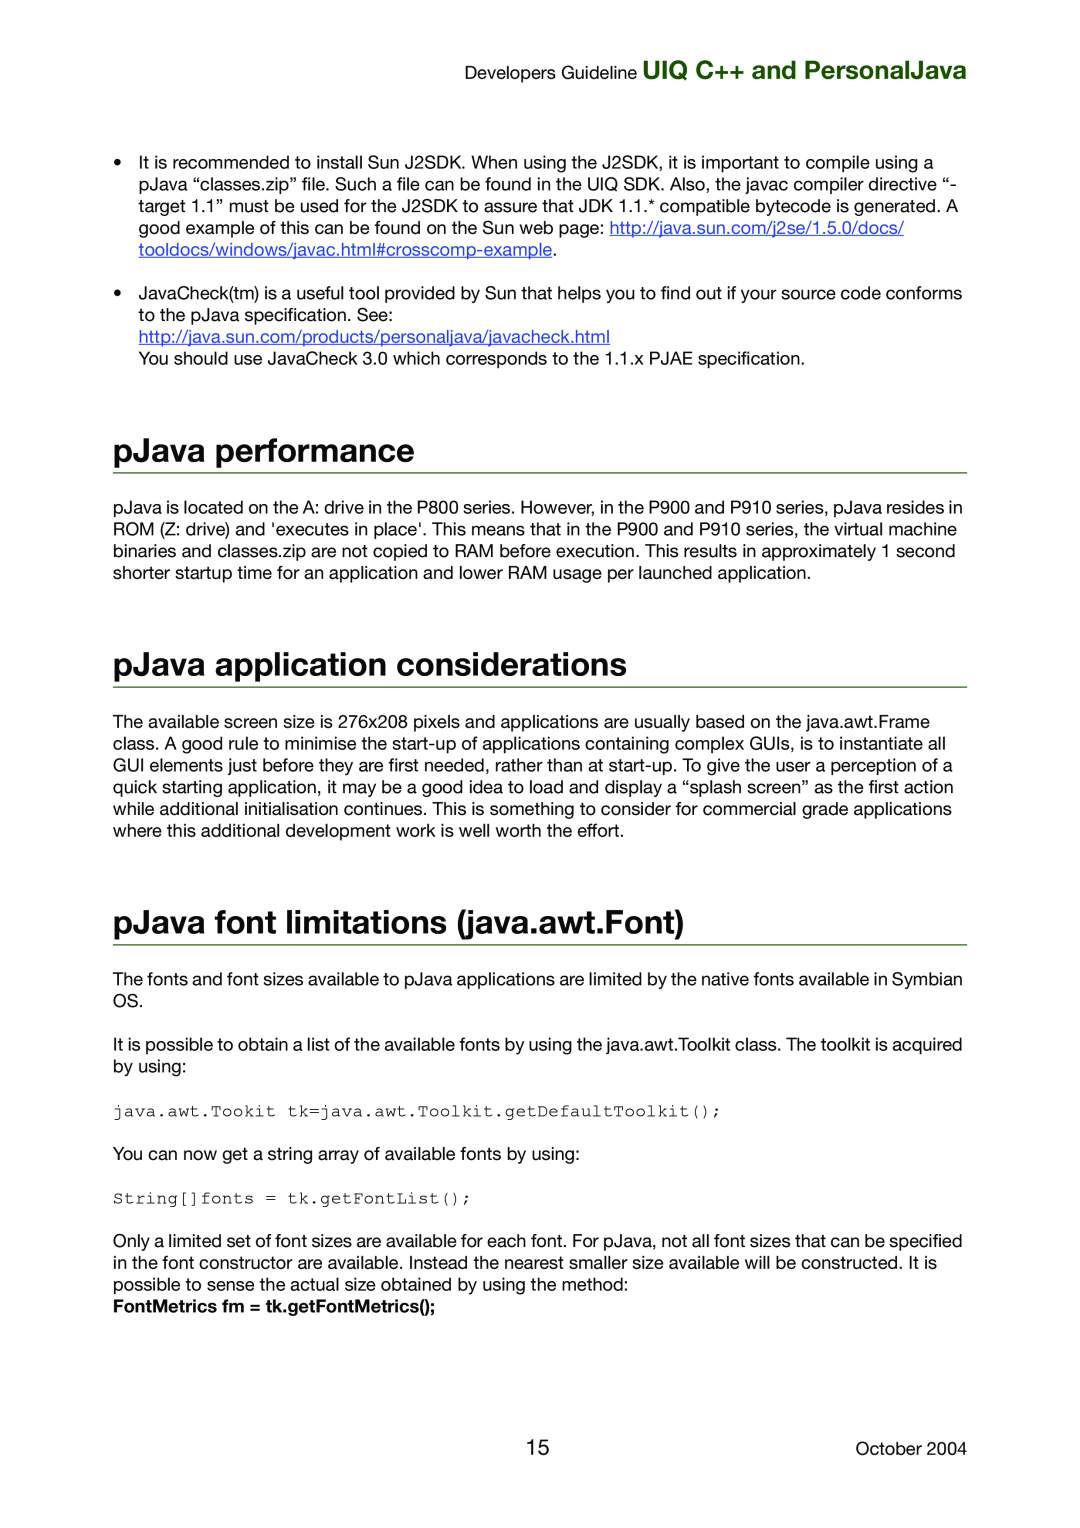 Sony Ericsson P800, P900 manual pJava performance, pJava application considerations, pJava font limitations java.awt.Font 